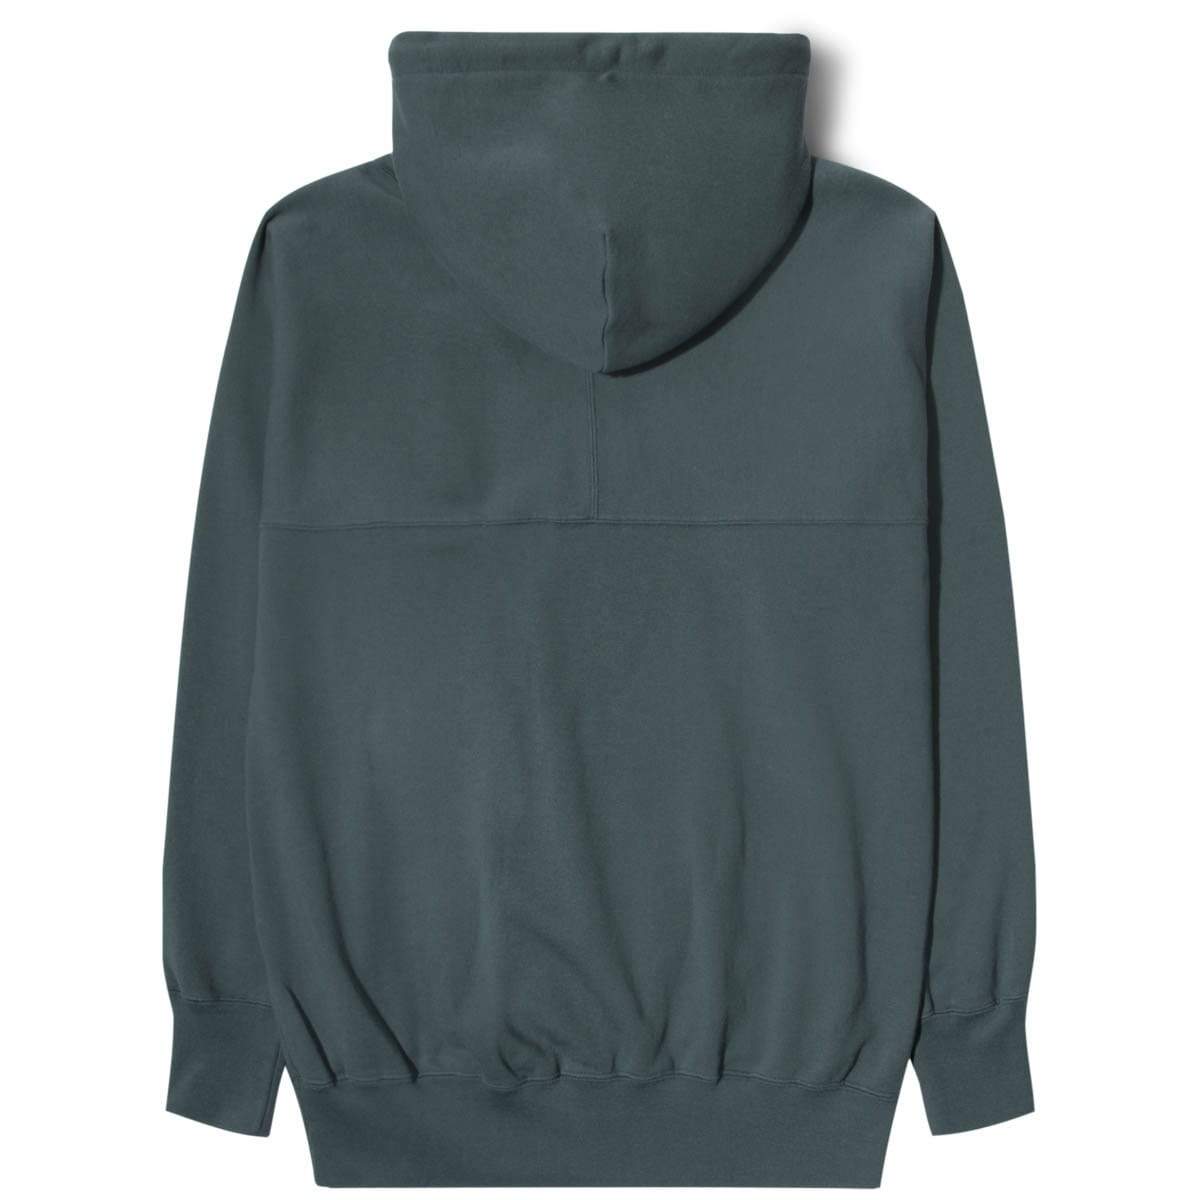 nanamica Hoodies & Sweatshirts HOODED PULLOVER